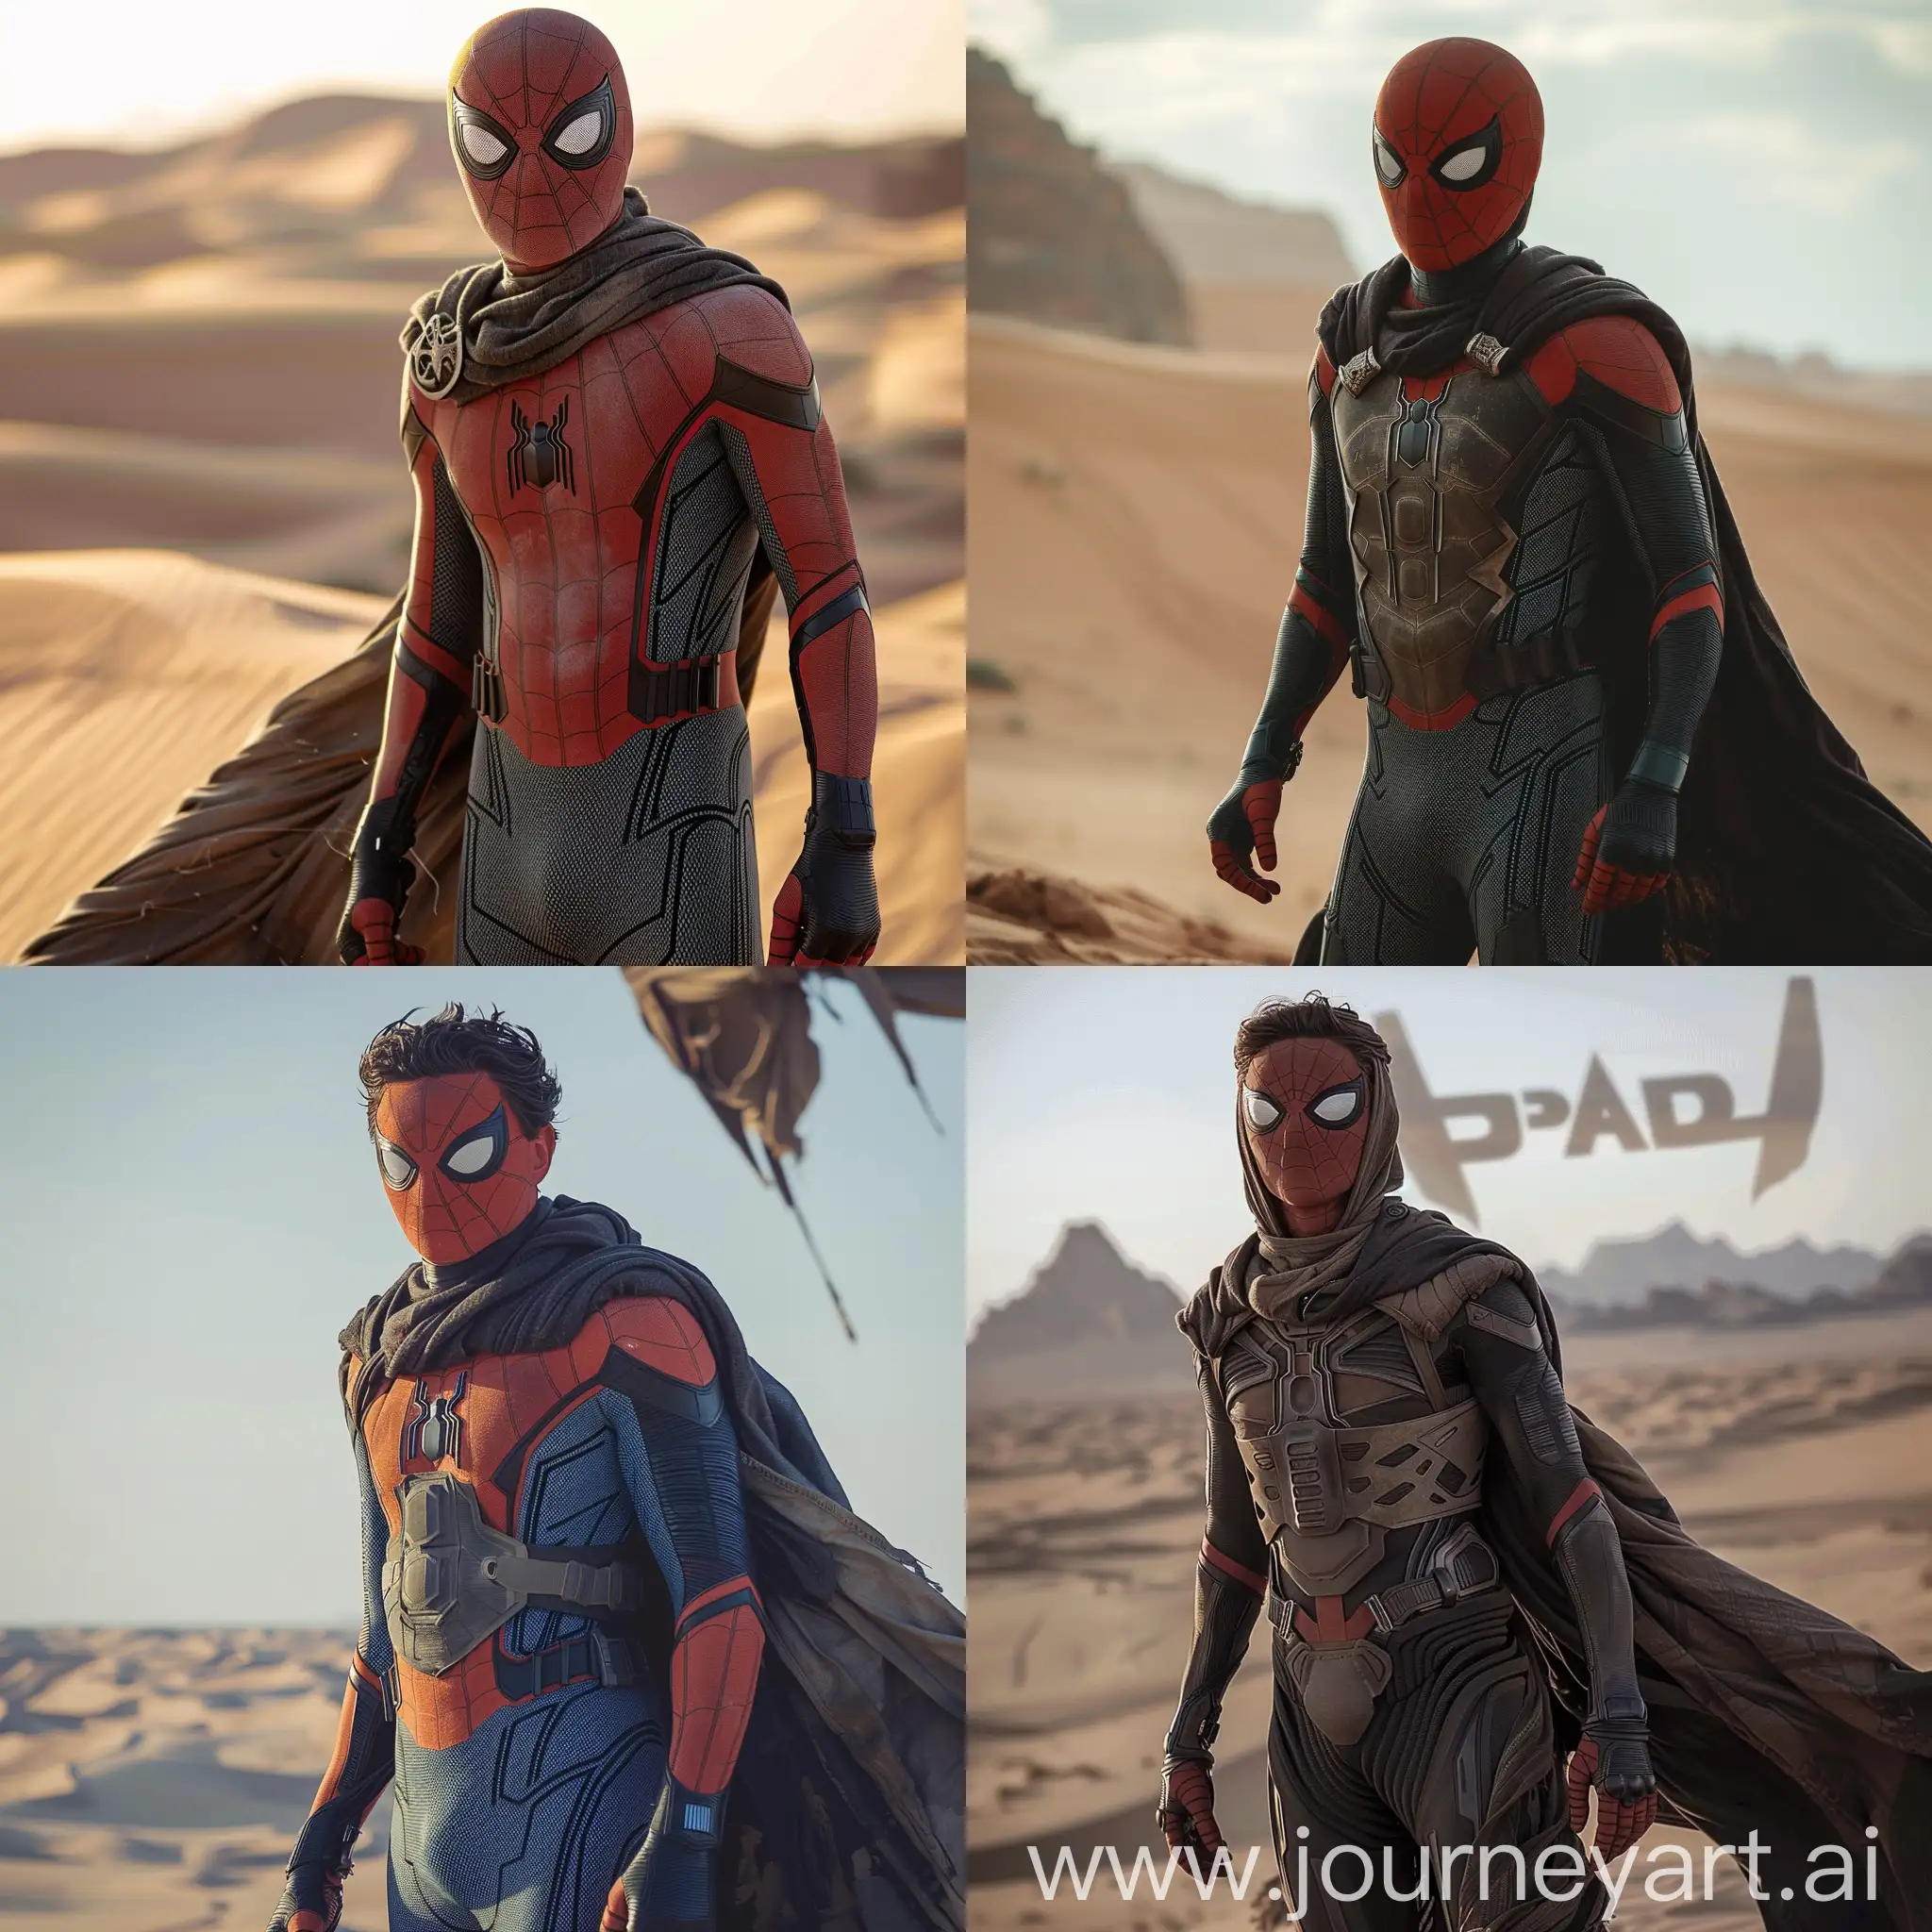 Spiderman in dune universe